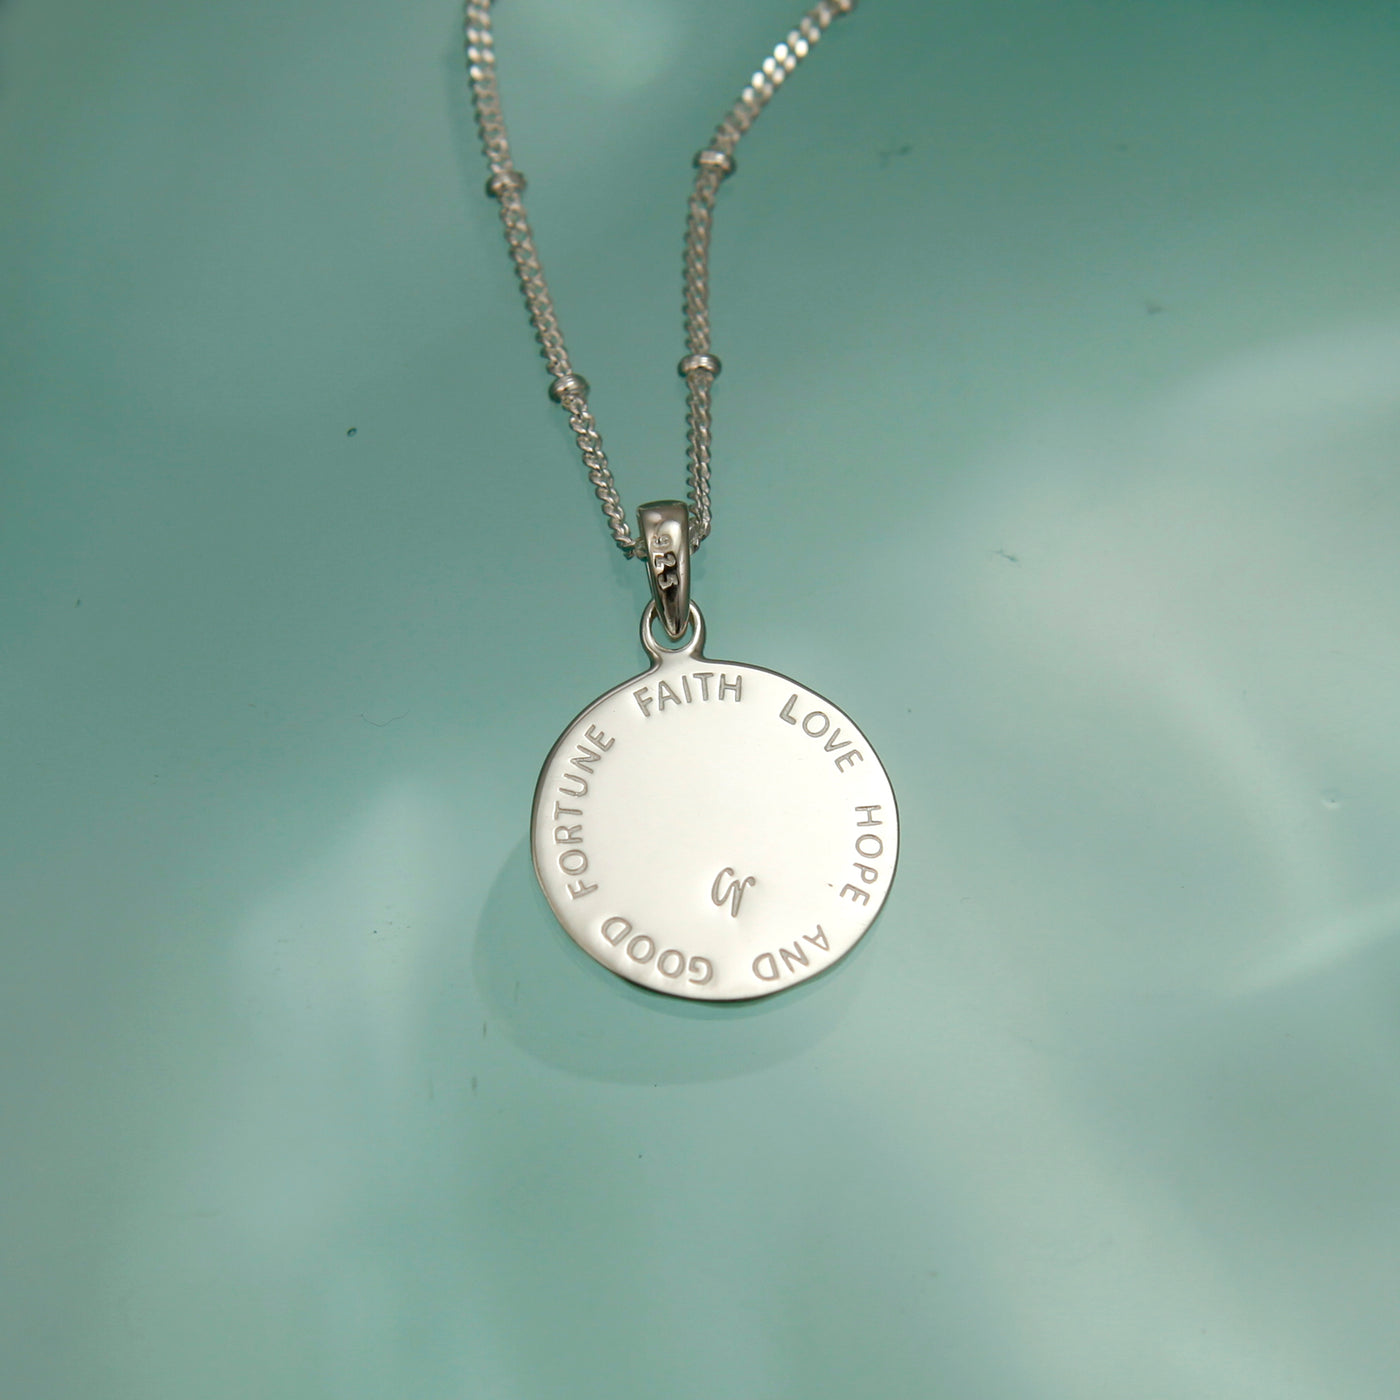 Silver Four-Leaf Clover Necklace Reverse Message